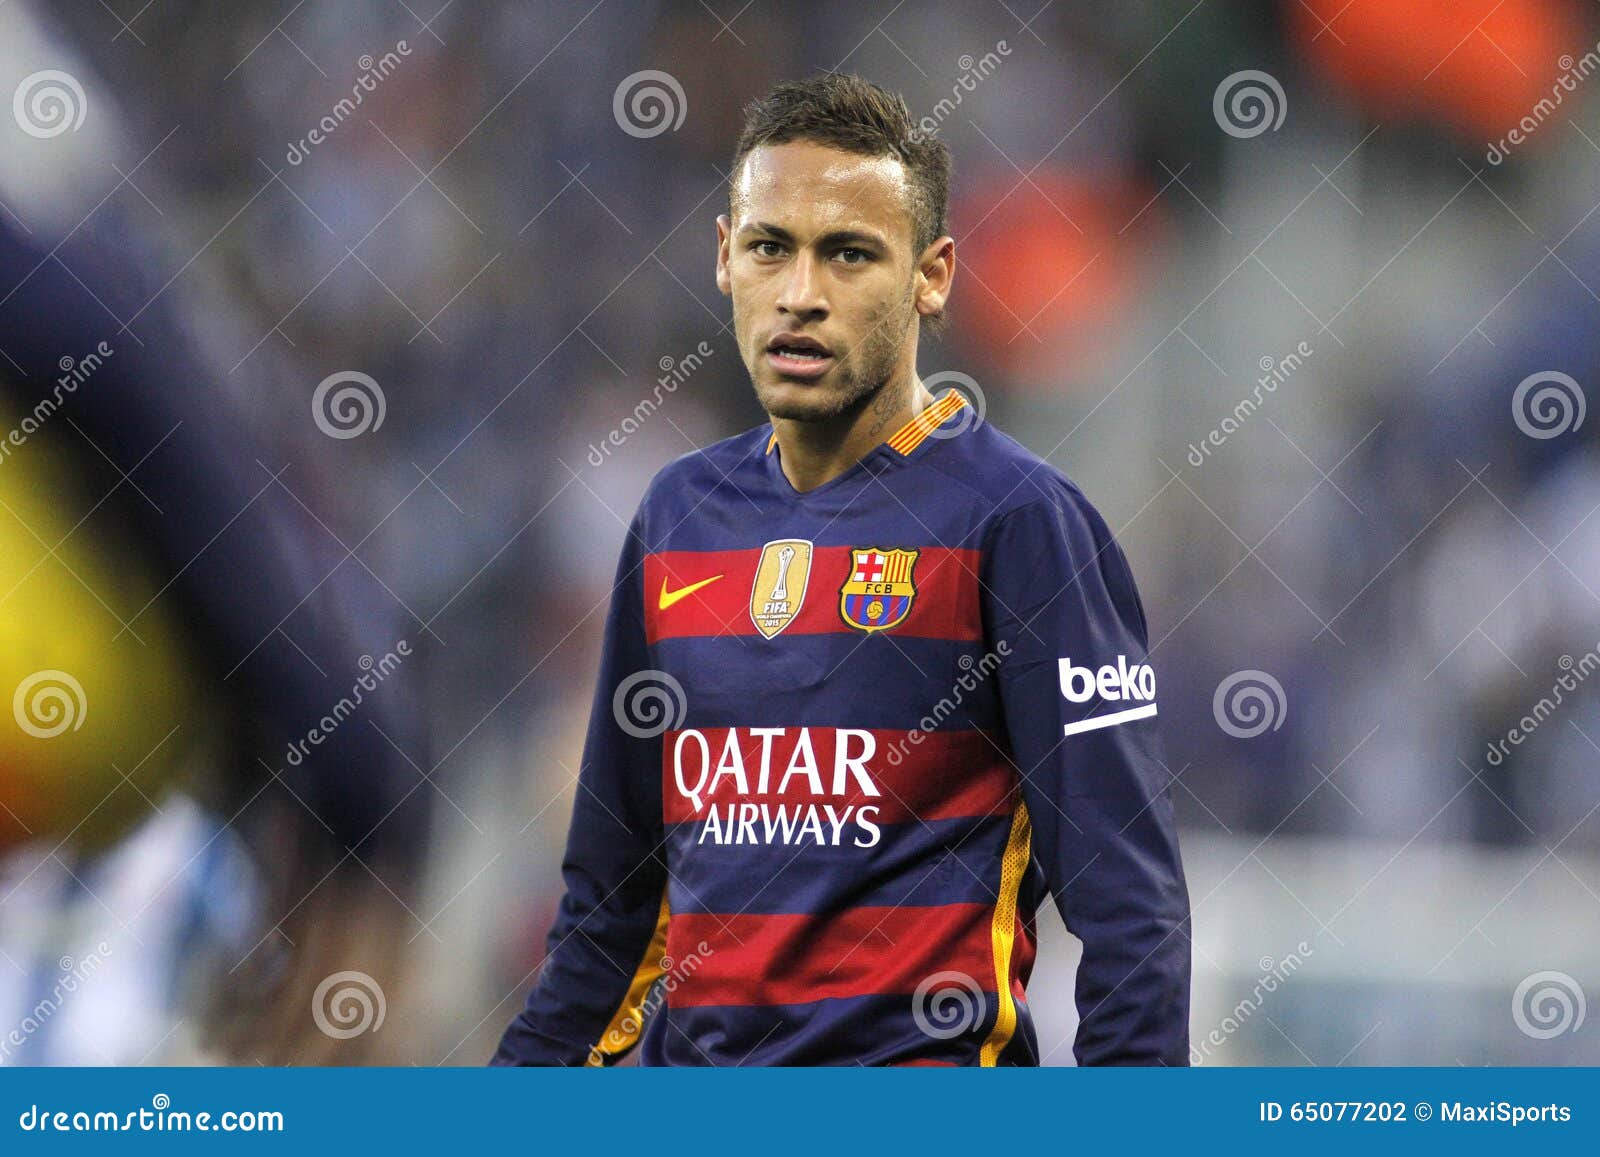 Neymar a problem for Barca claims Cruyff  FourFourTwo